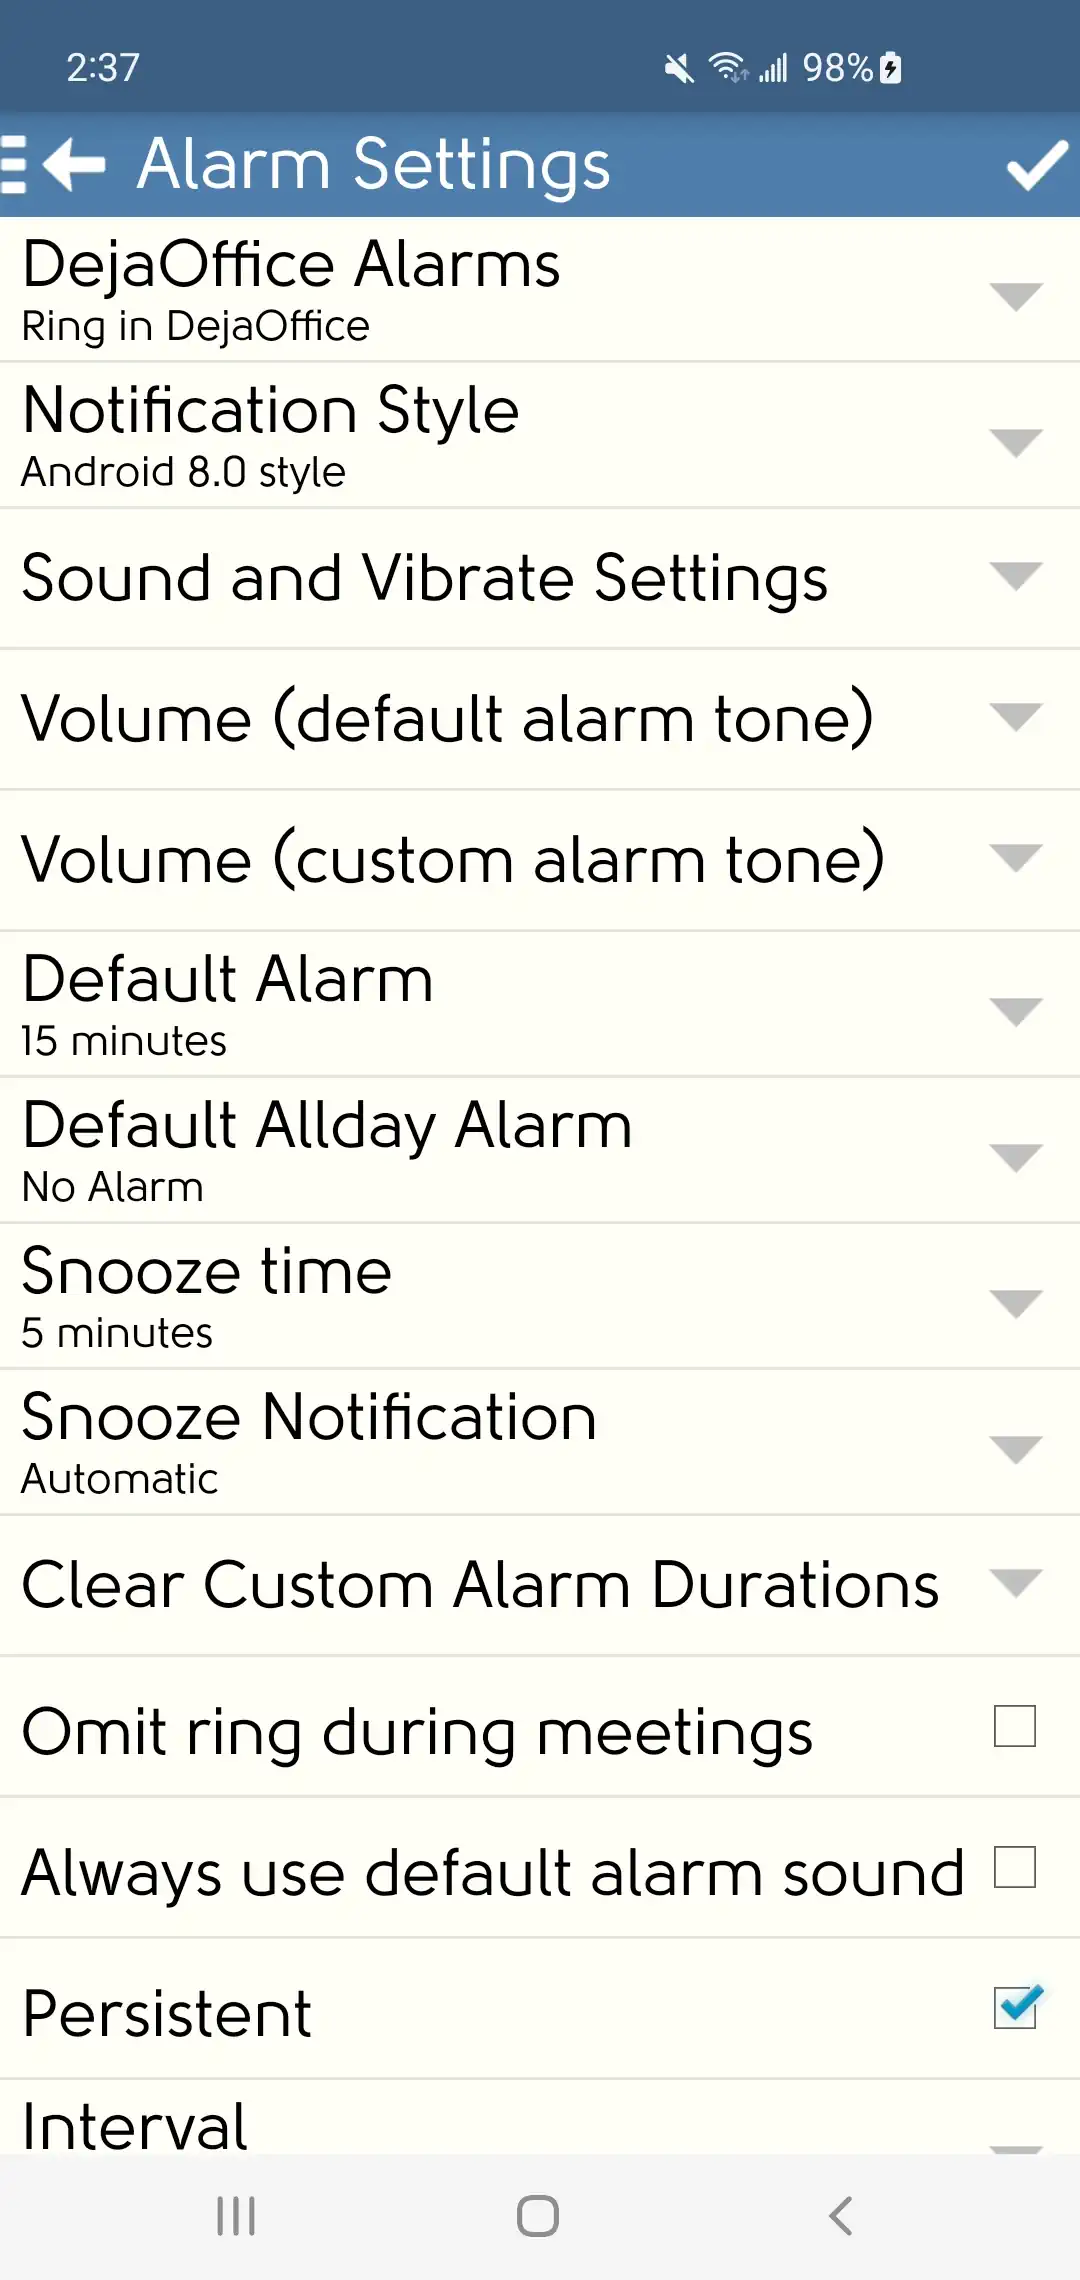 DejaOffice Alarm Settings